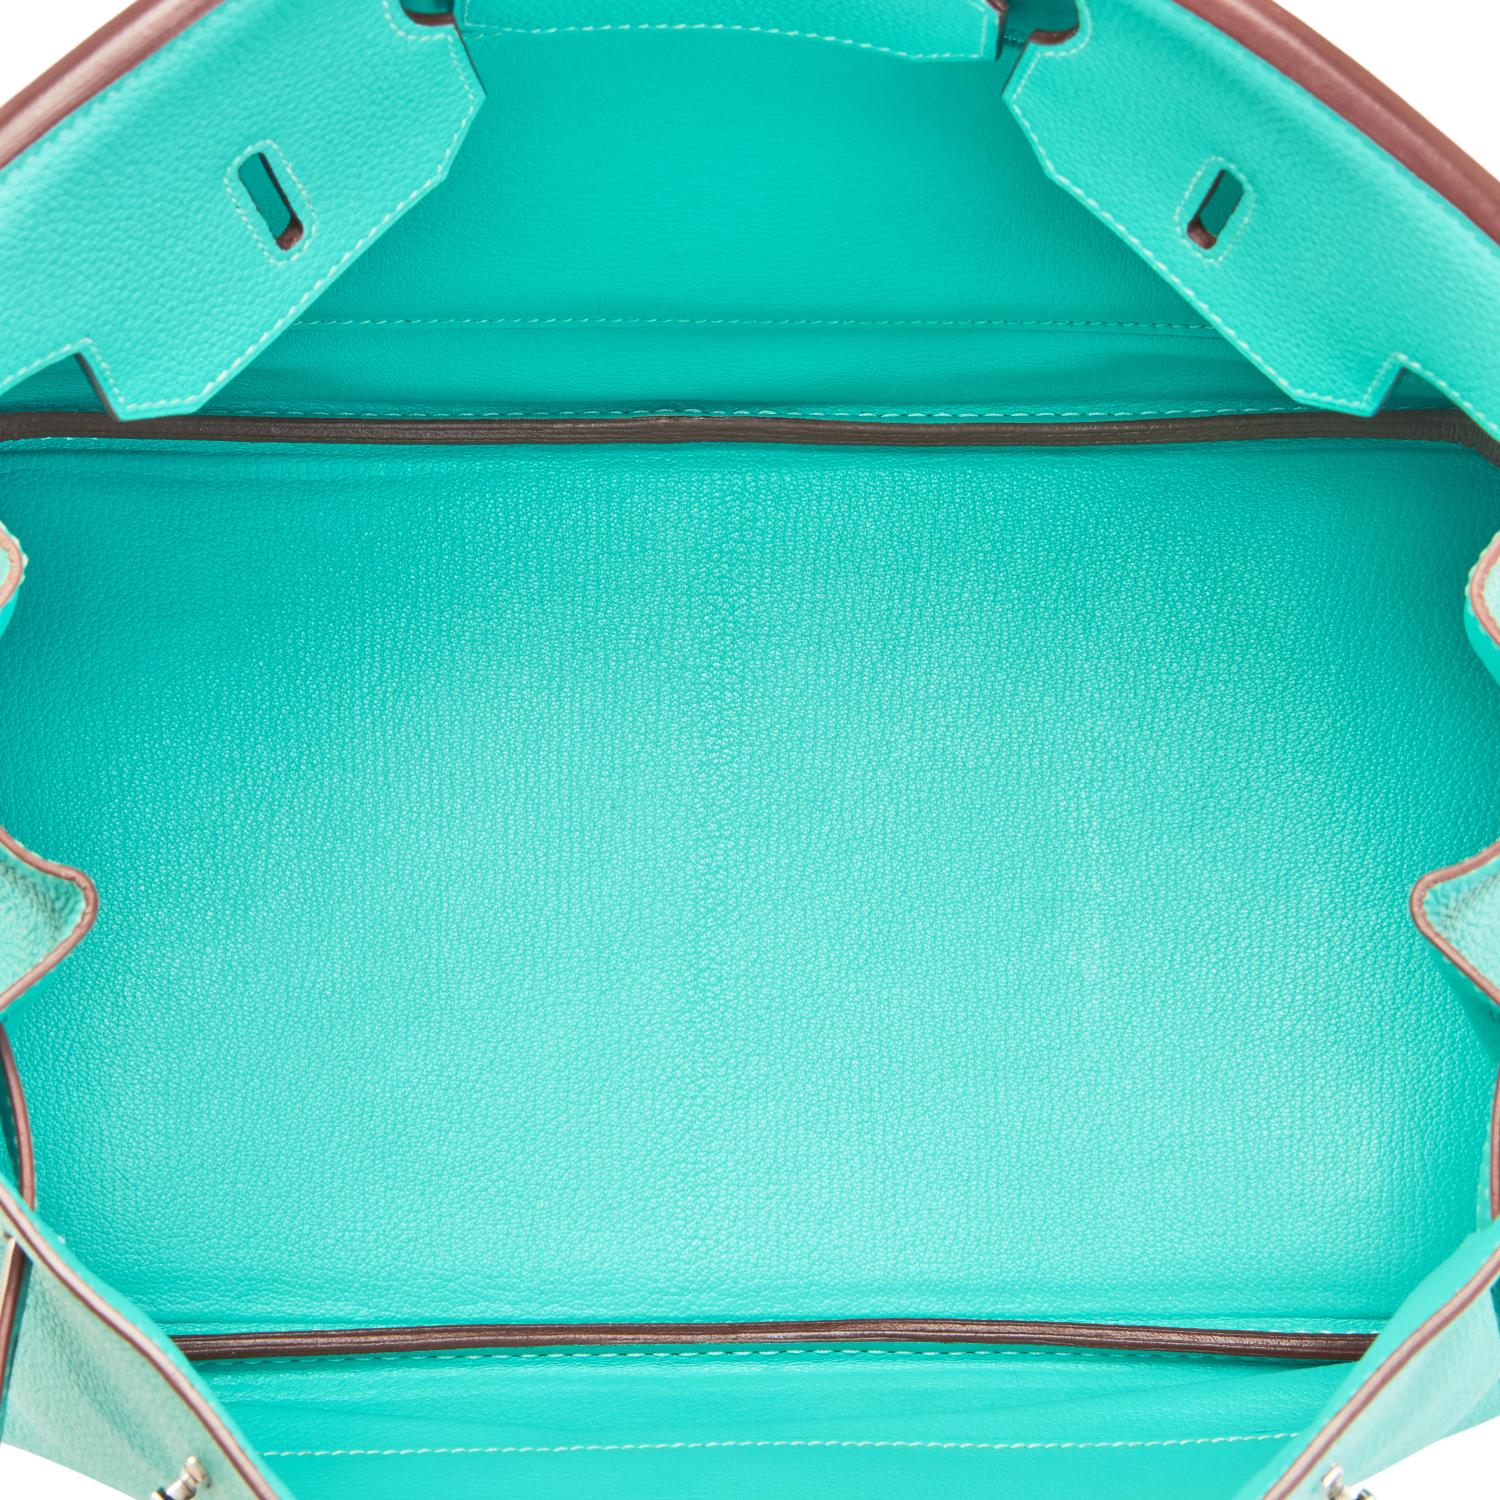 Hermes Birkin 35cm Lagoon Blue Togo Palladium Hardware Bag RARE For Sale 6